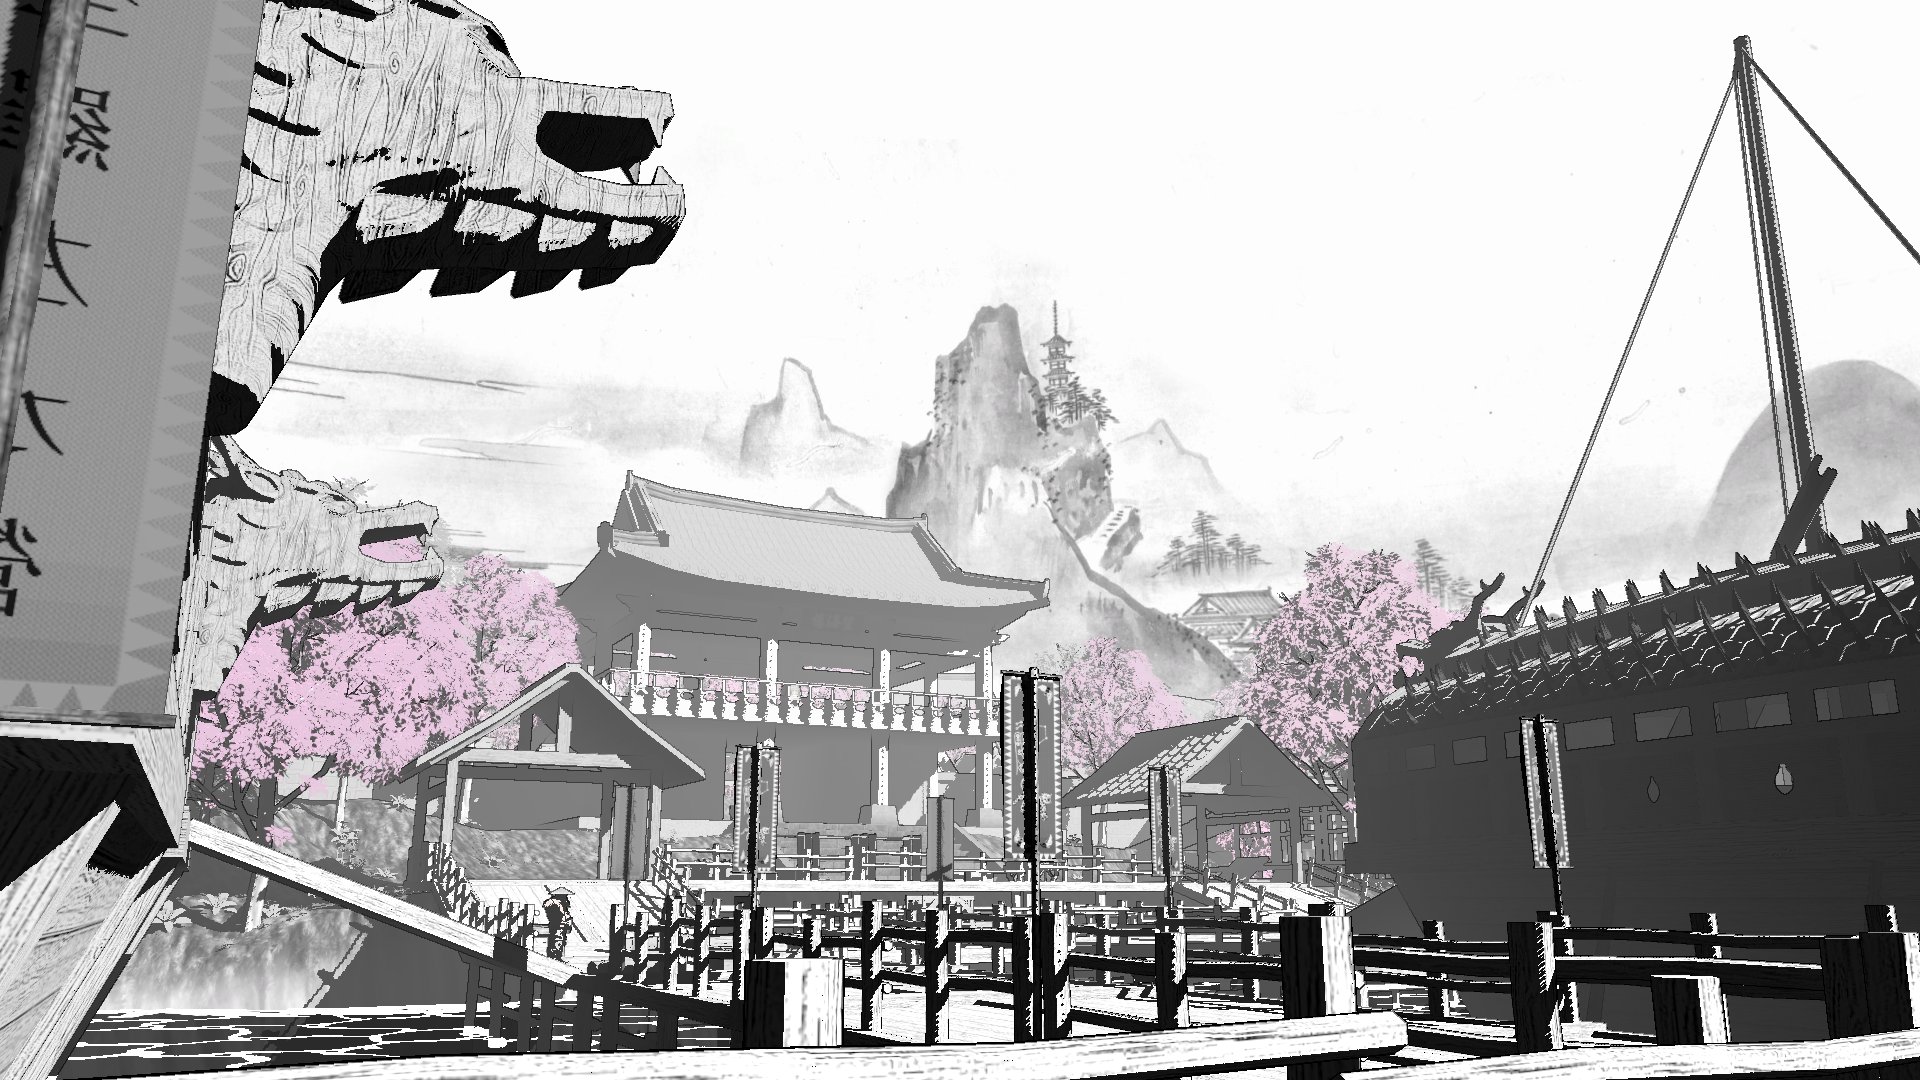 Samurai Slaughter House Screenshot